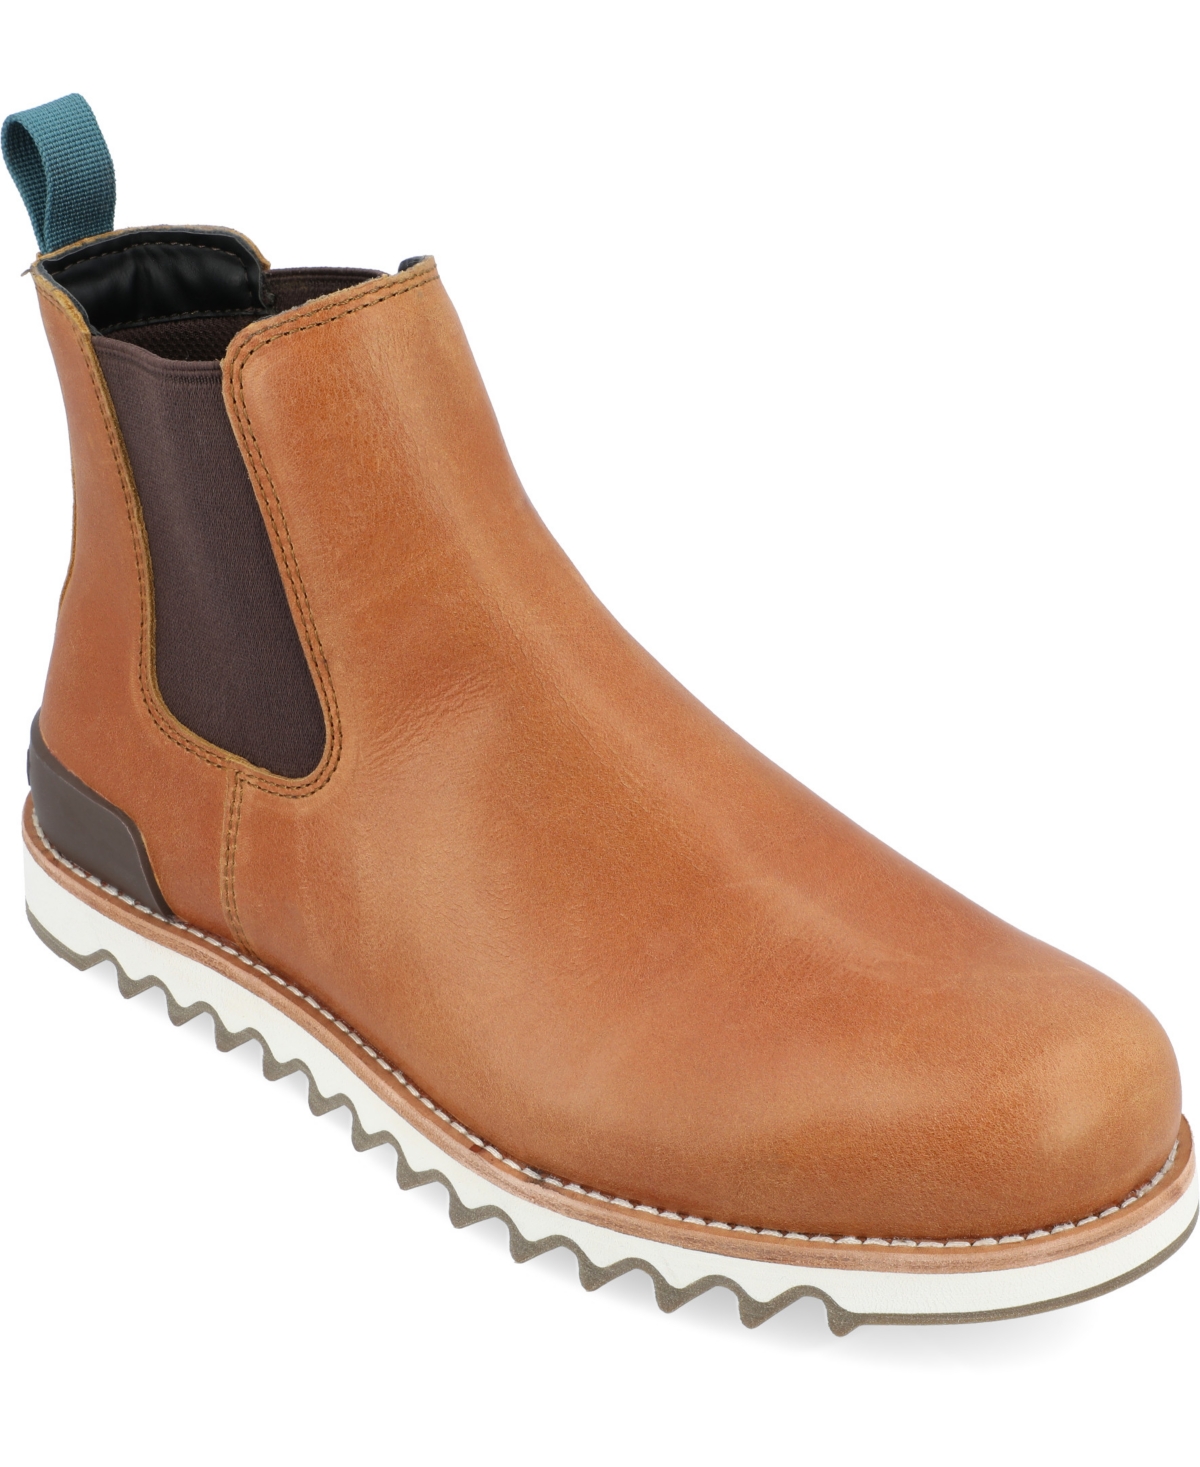 Men's Yellowstone Tru Comfort Foam Pull-On Water Resistant Chelsea Boots - Gray